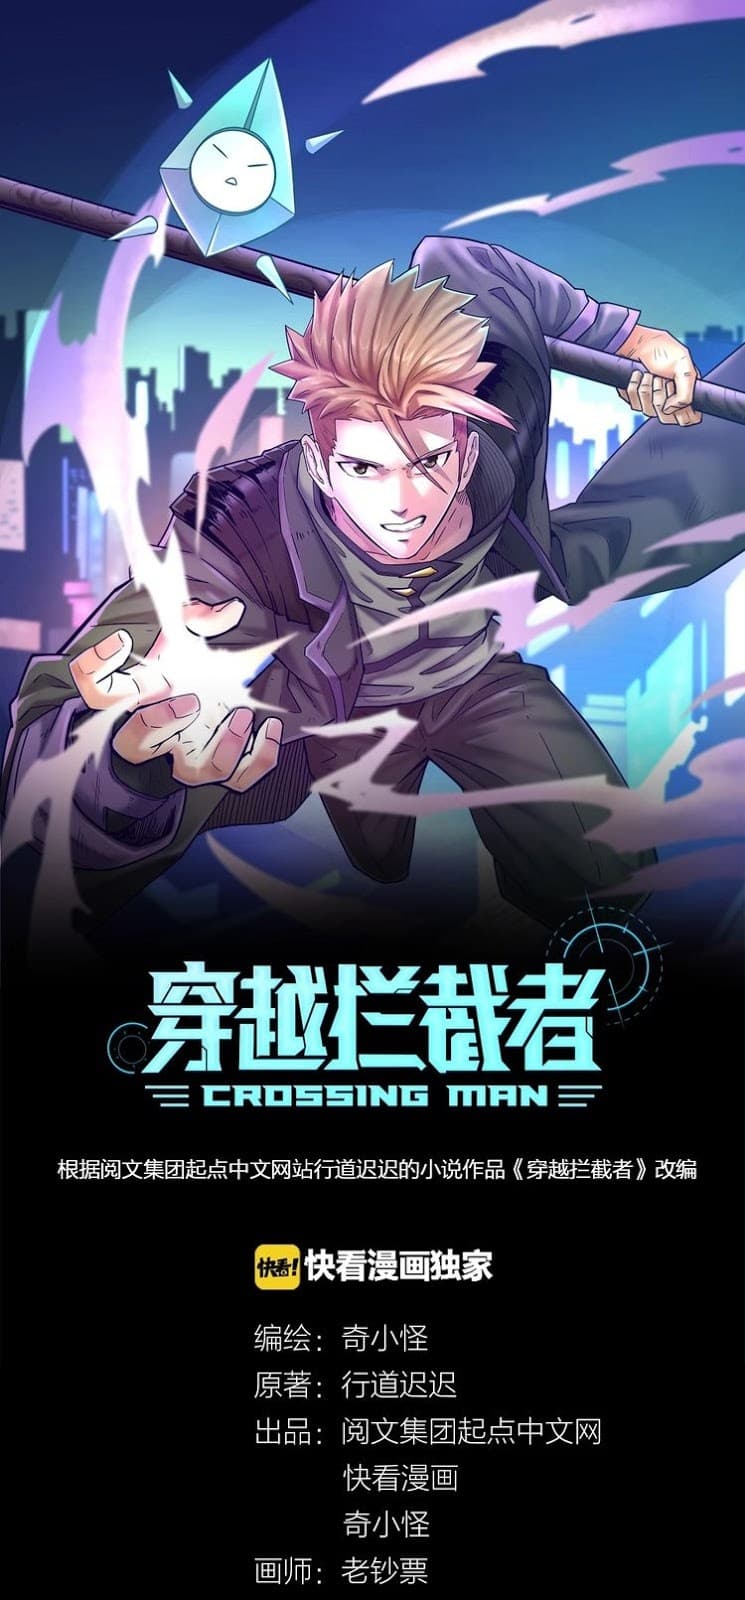 Crossing Man1 (1)